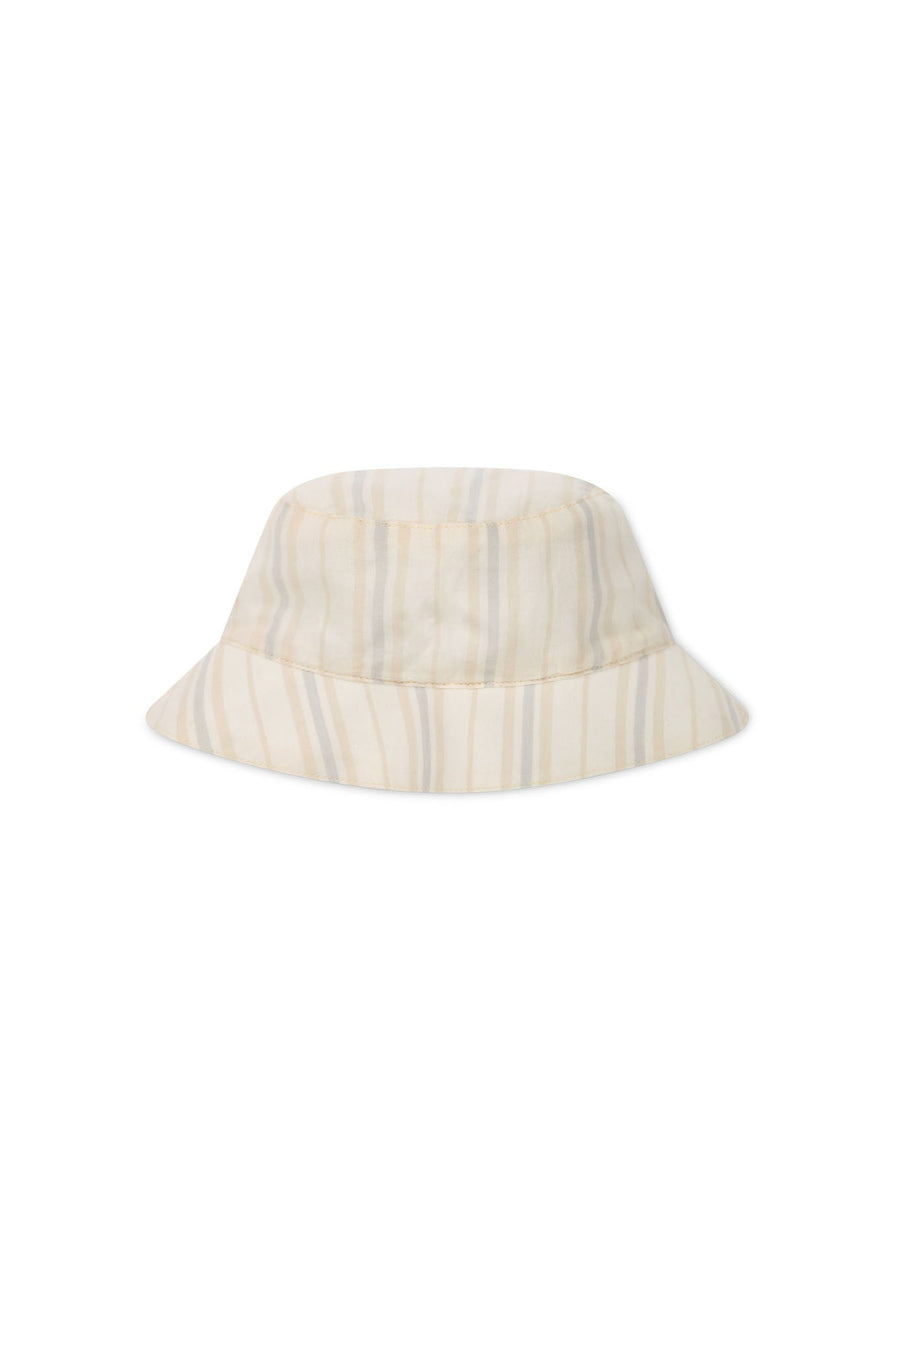 Bucket Hat - Coastal Stripe Cloud Childrens Hat from Jamie Kay NZ